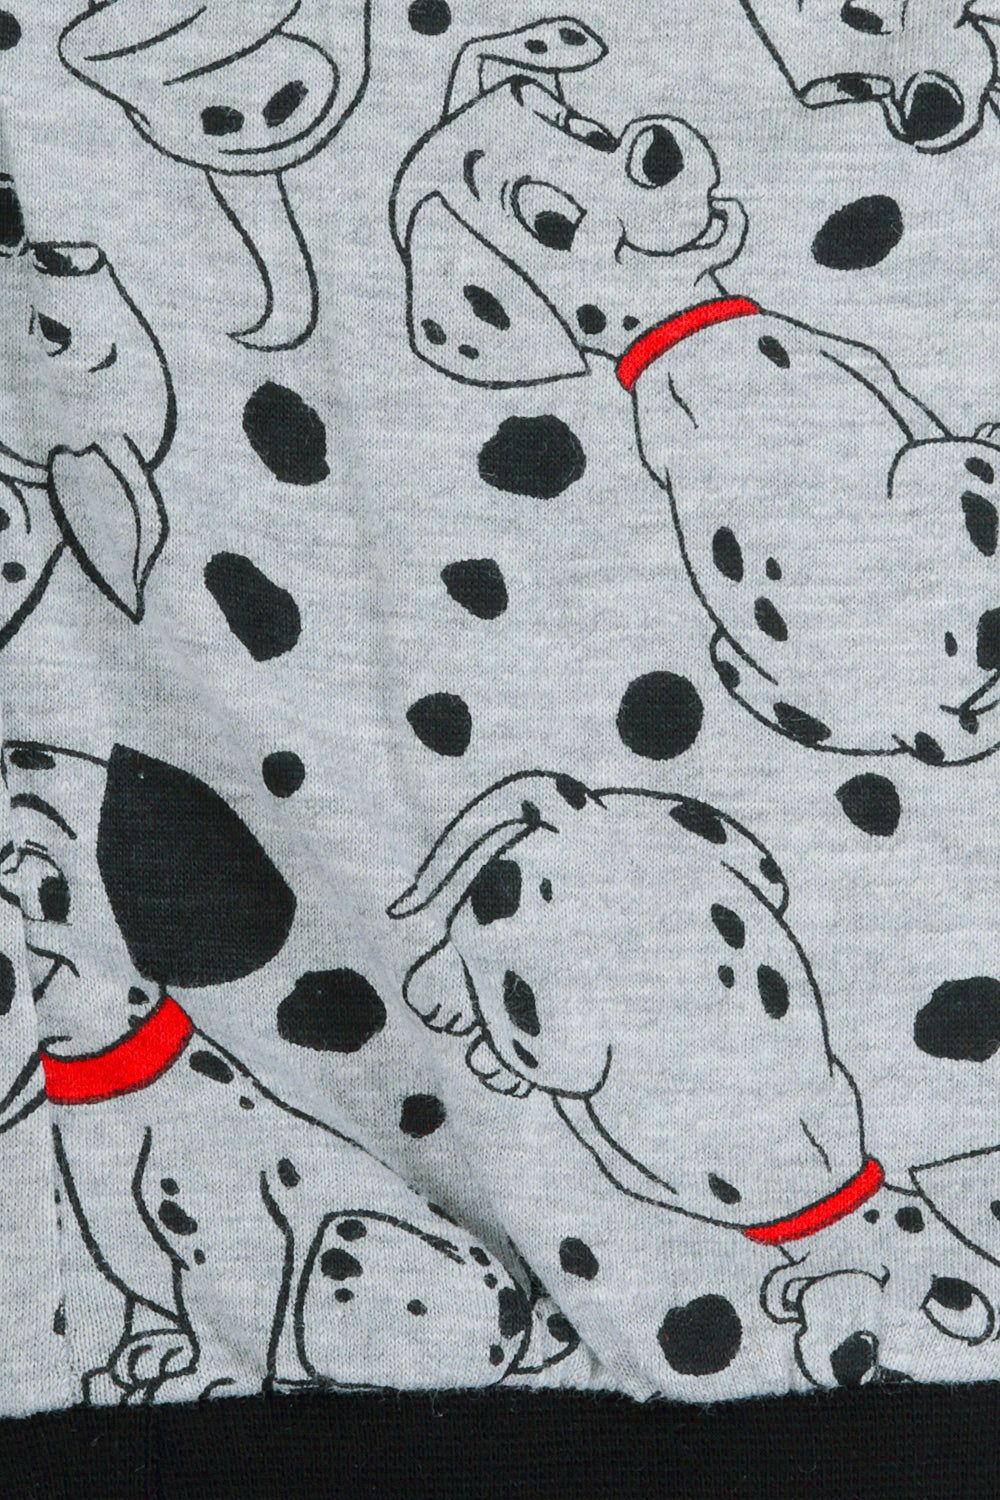 Ladies 101 Dalmatians Lean On Me Disney  Long Pyjamas - Pyjamas.com